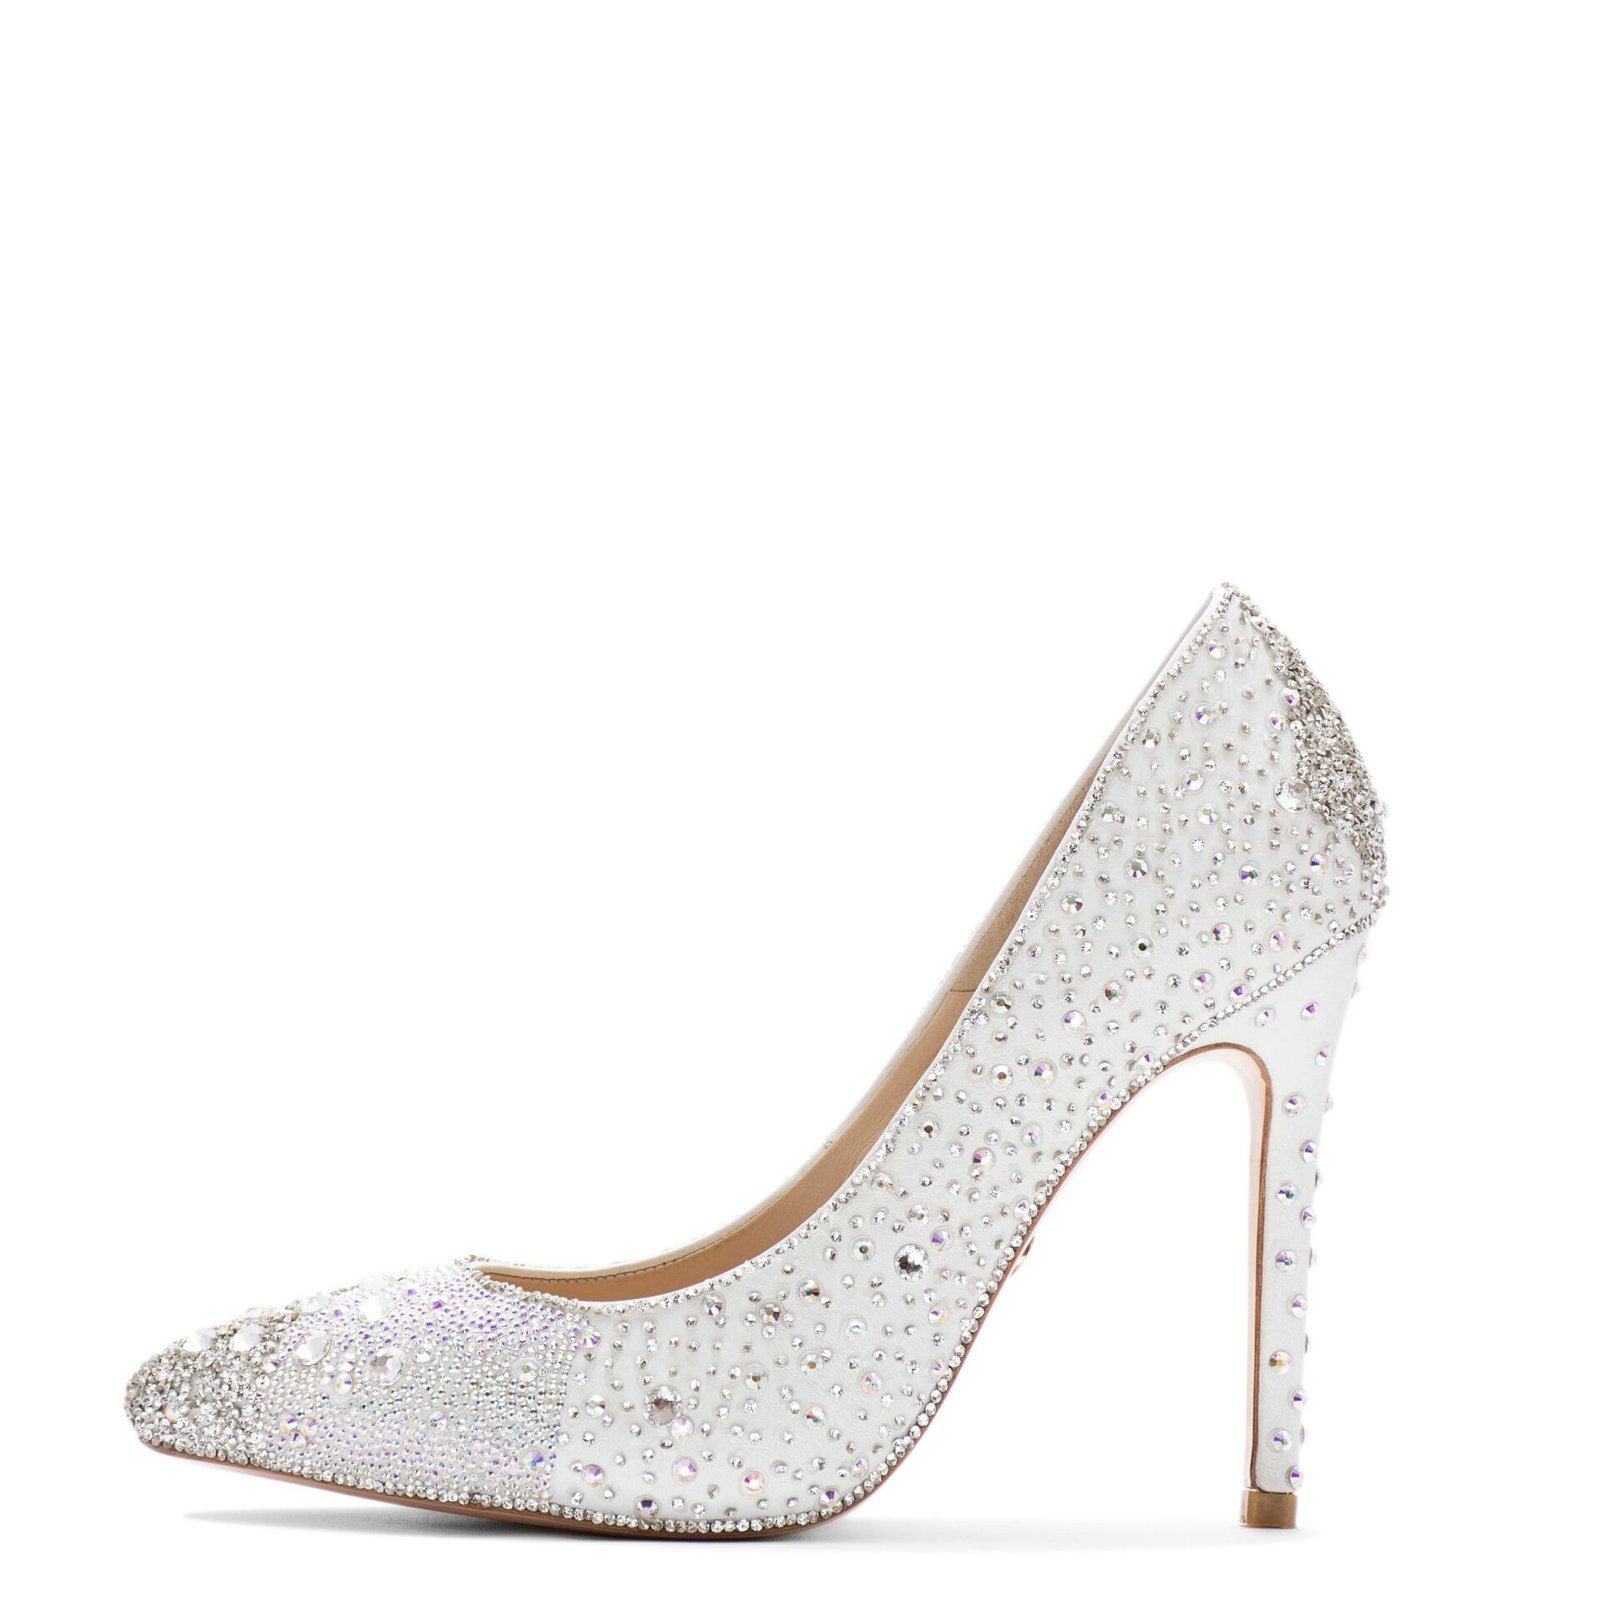 Bridal Shoes with Swarovski crystals